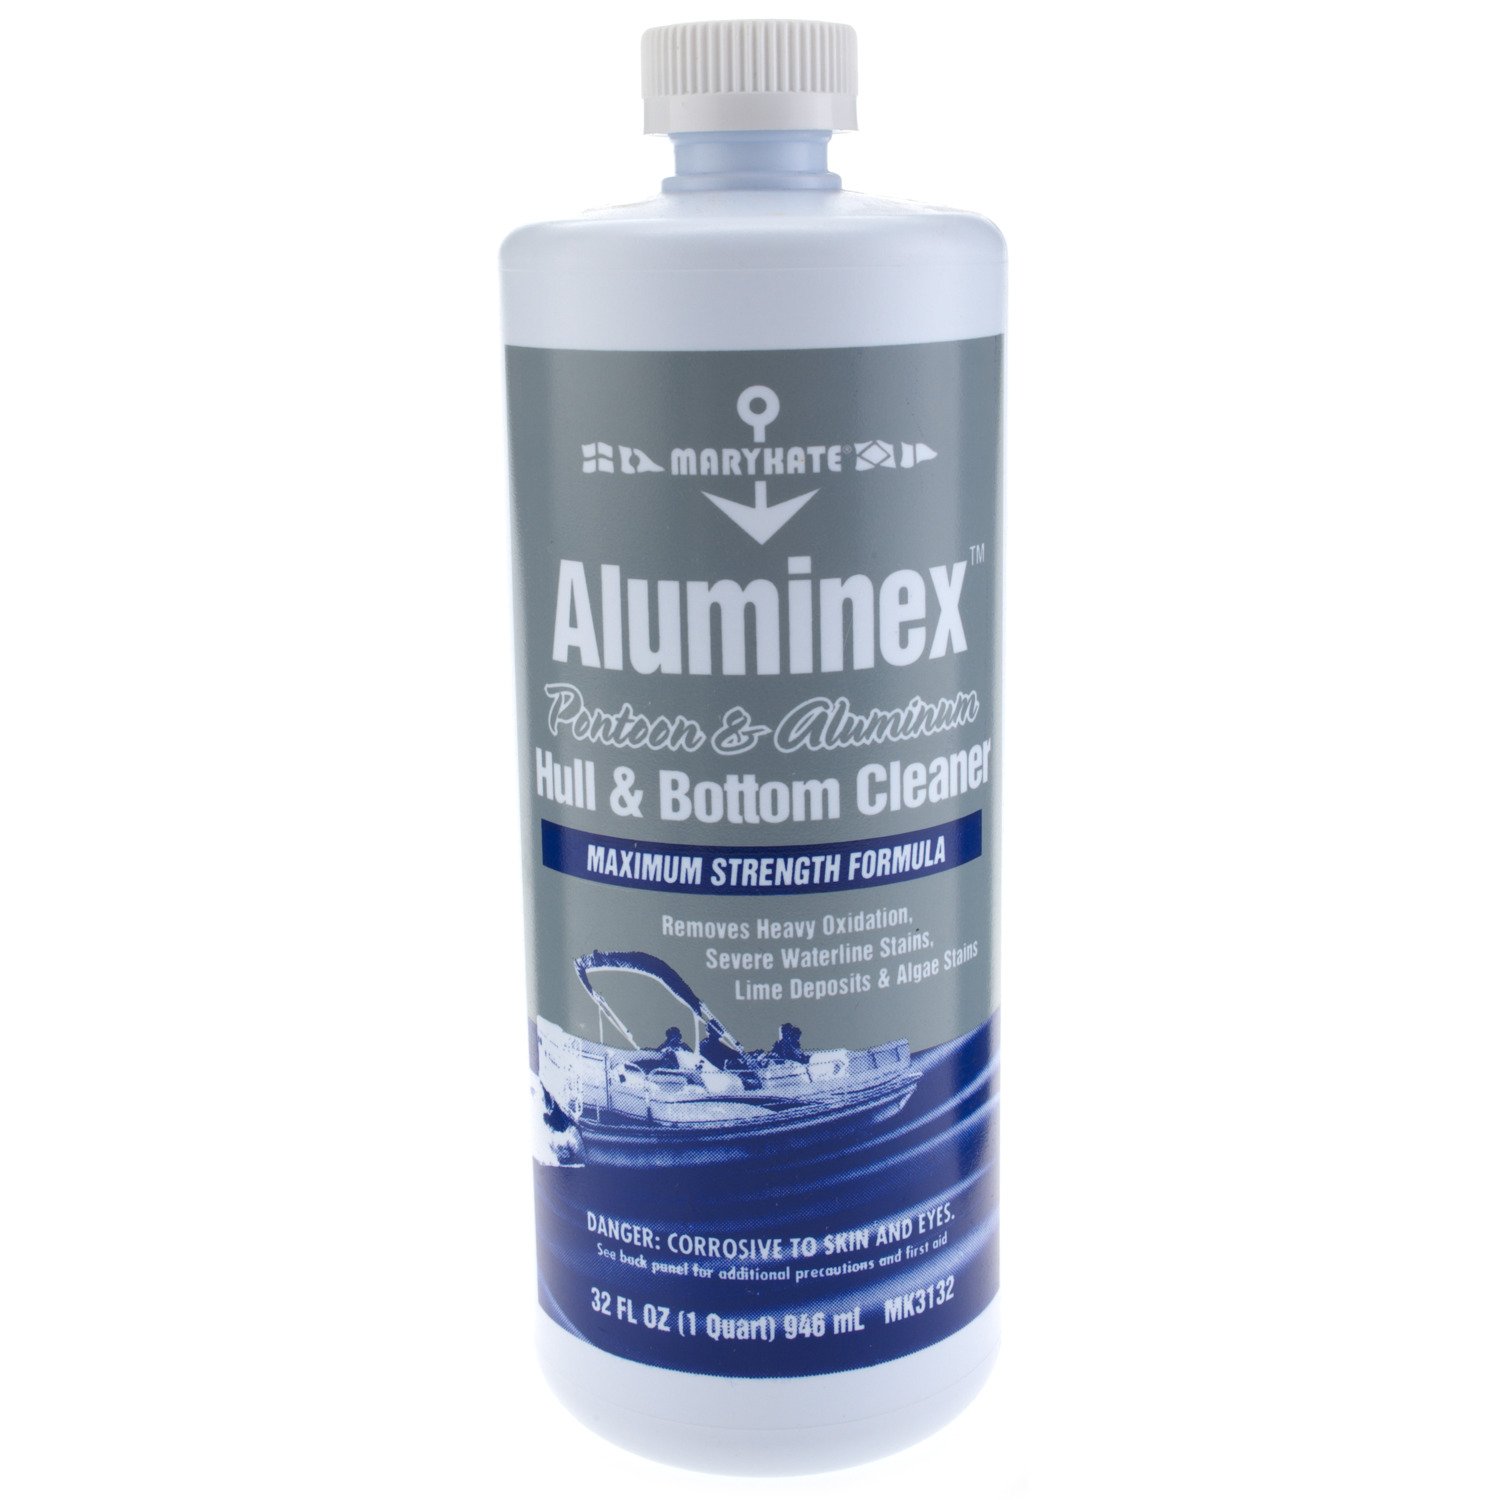 ... Aluminex™ 32 fl. oz. Pontoon and Aluminum Hull Cleaner from Academy